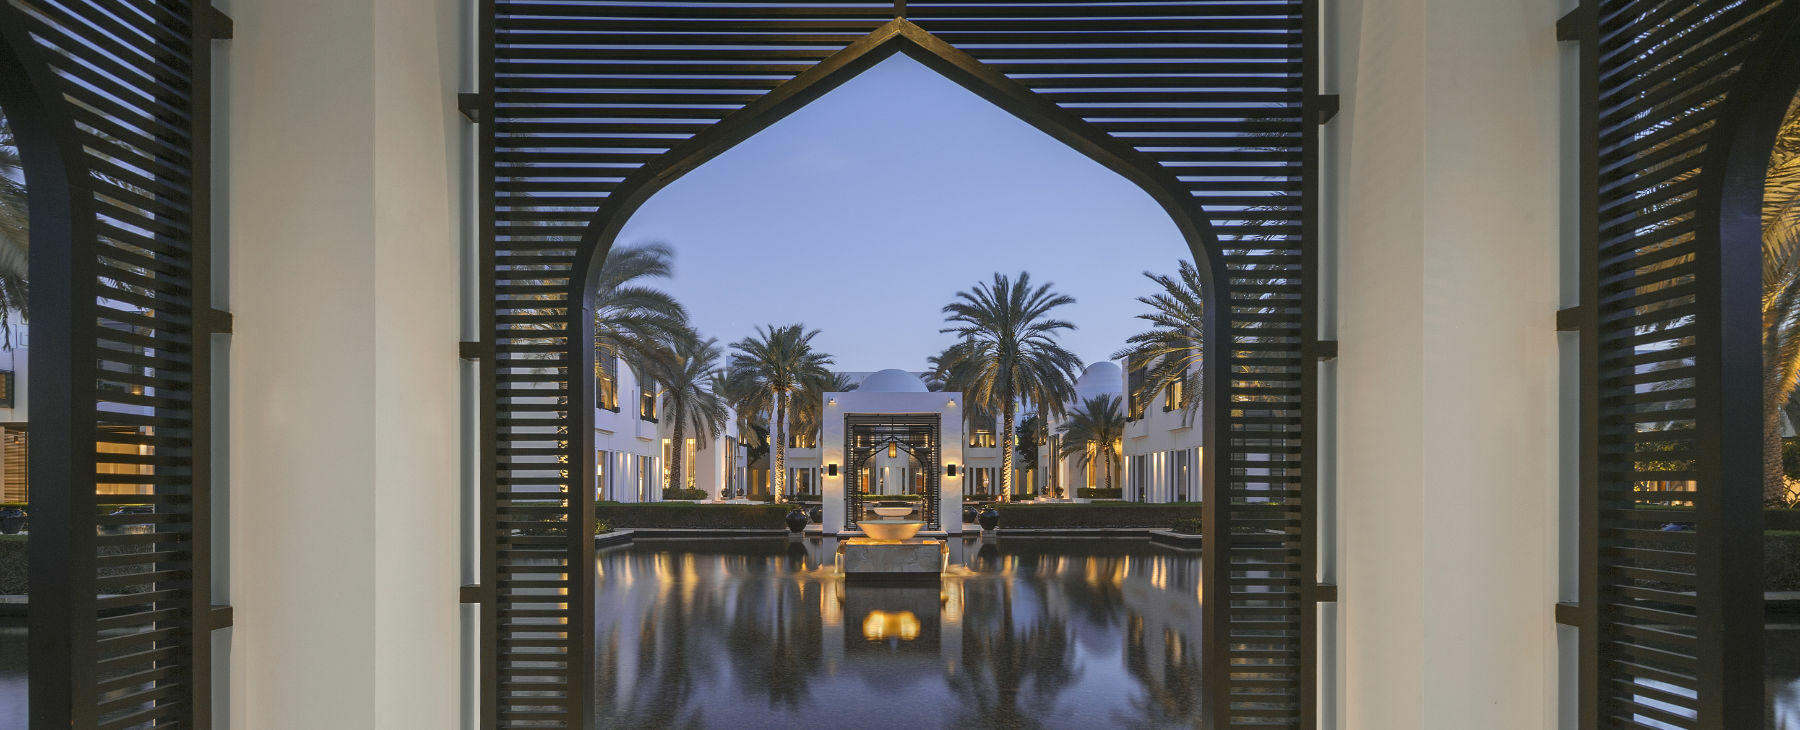 Luxushotel The Chedi Muscat Oman